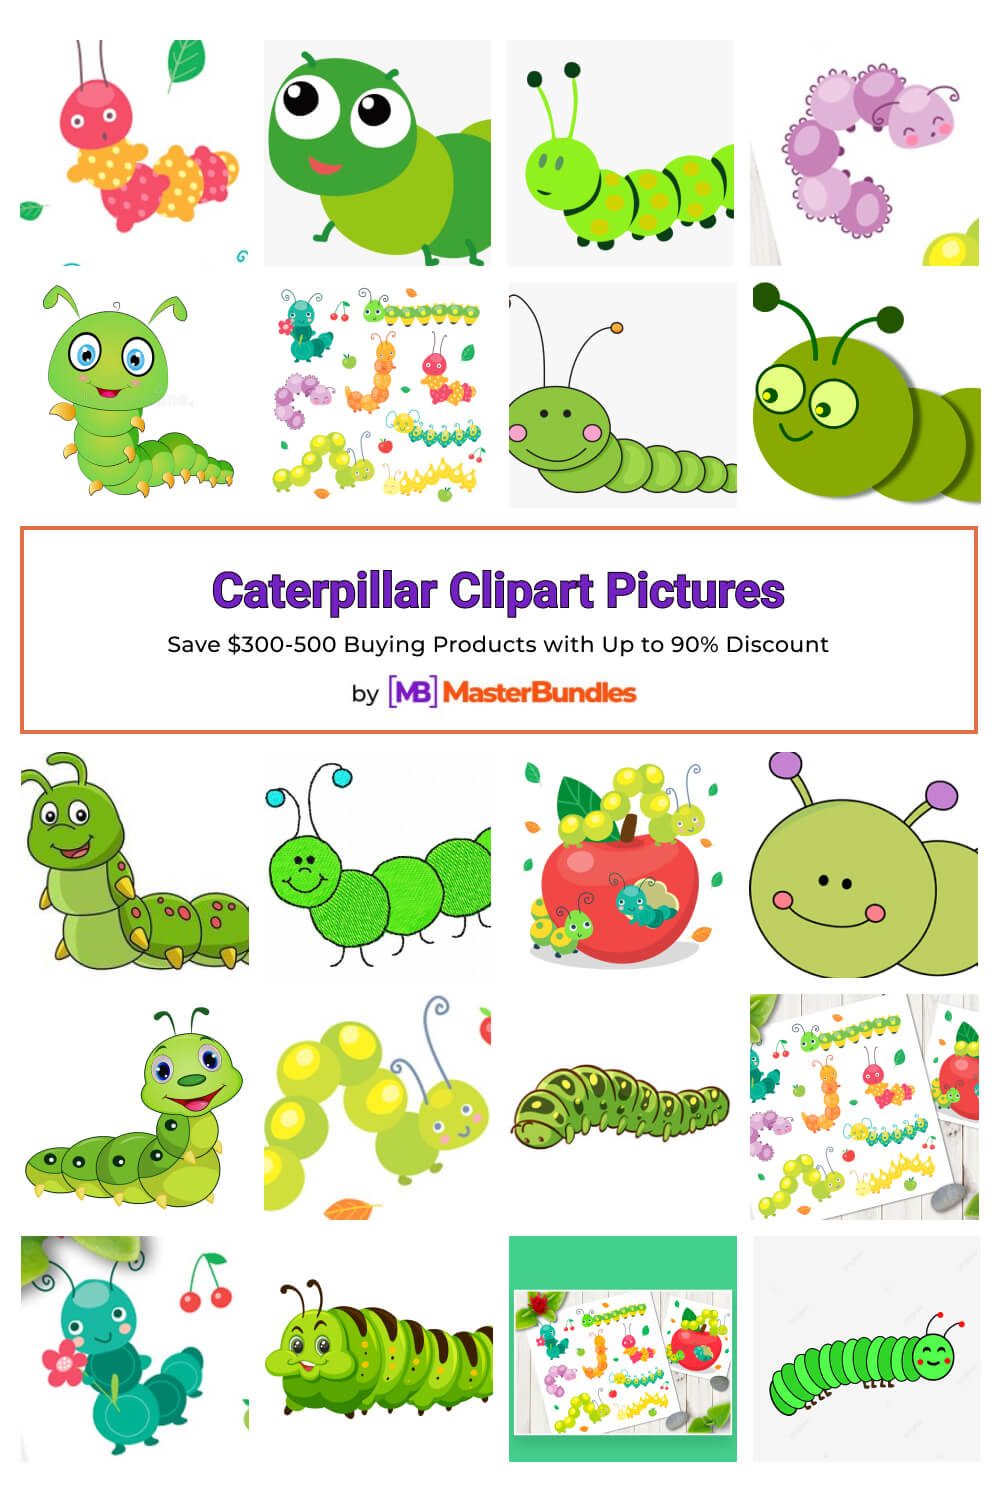 caterpillar clipart pictures pinterest image.